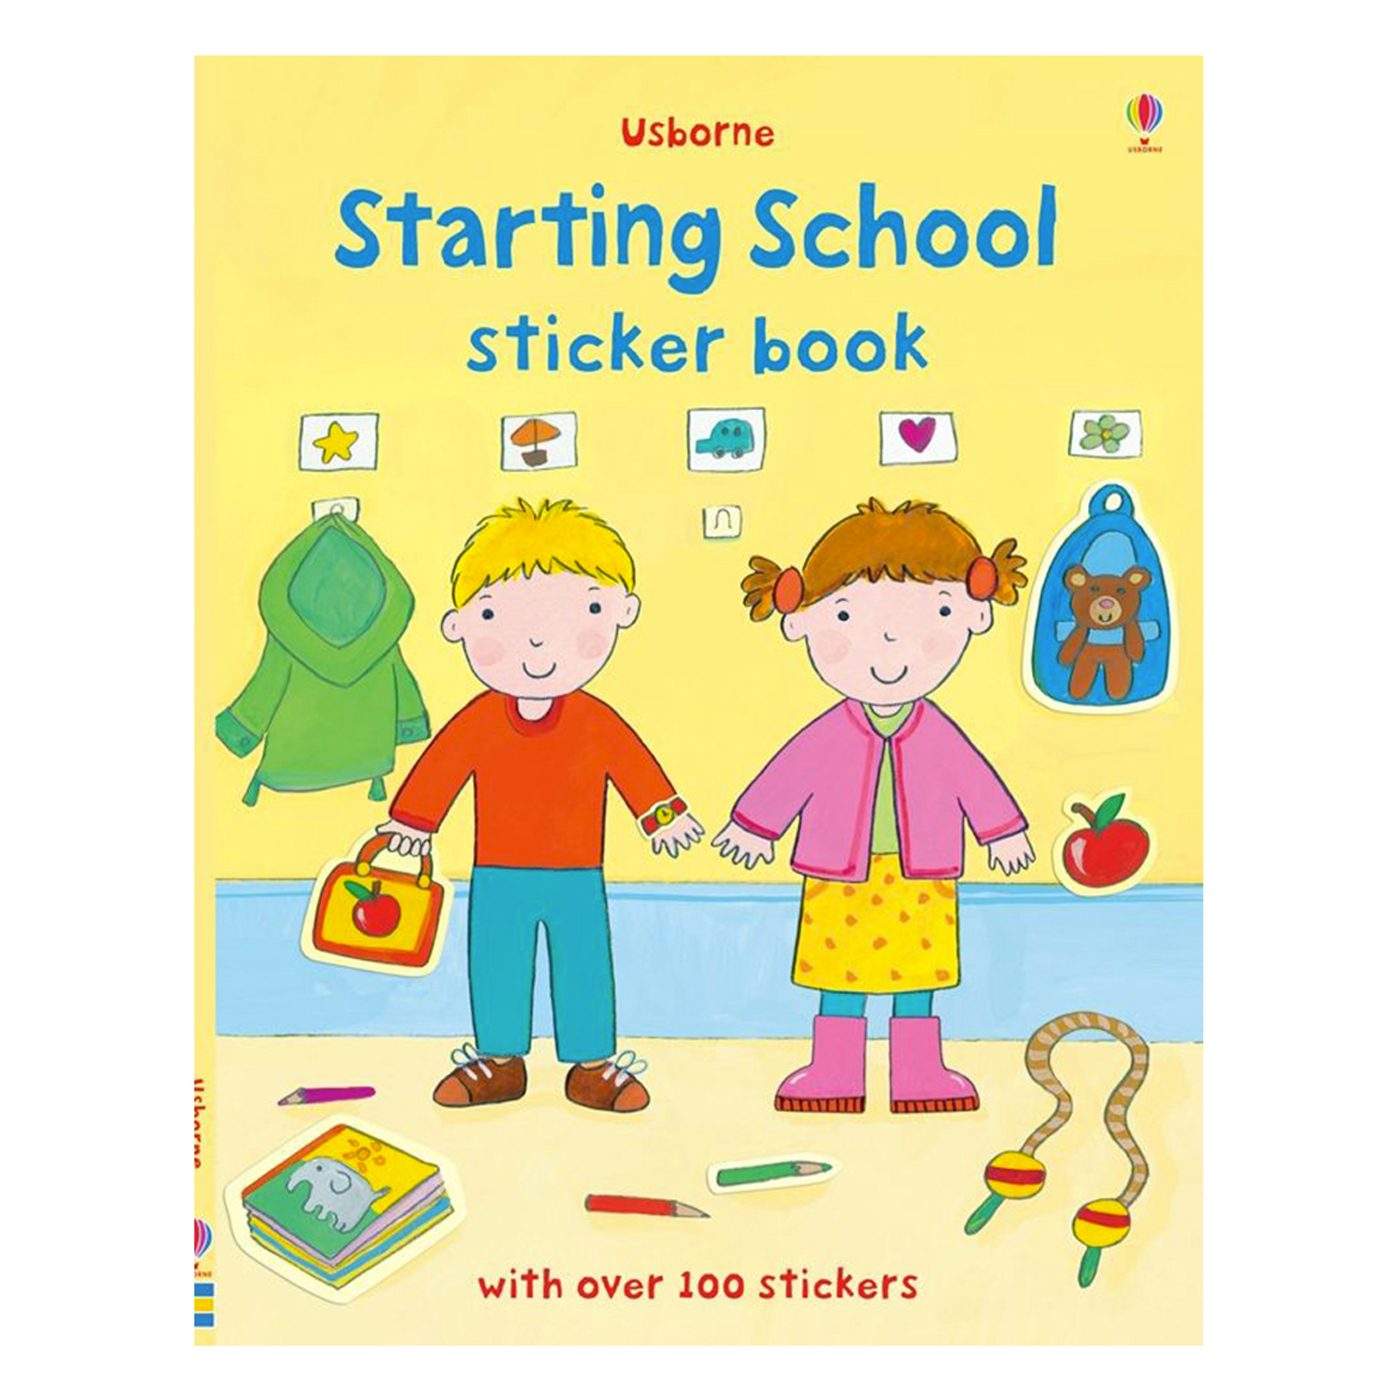  Starting School Sticker Book